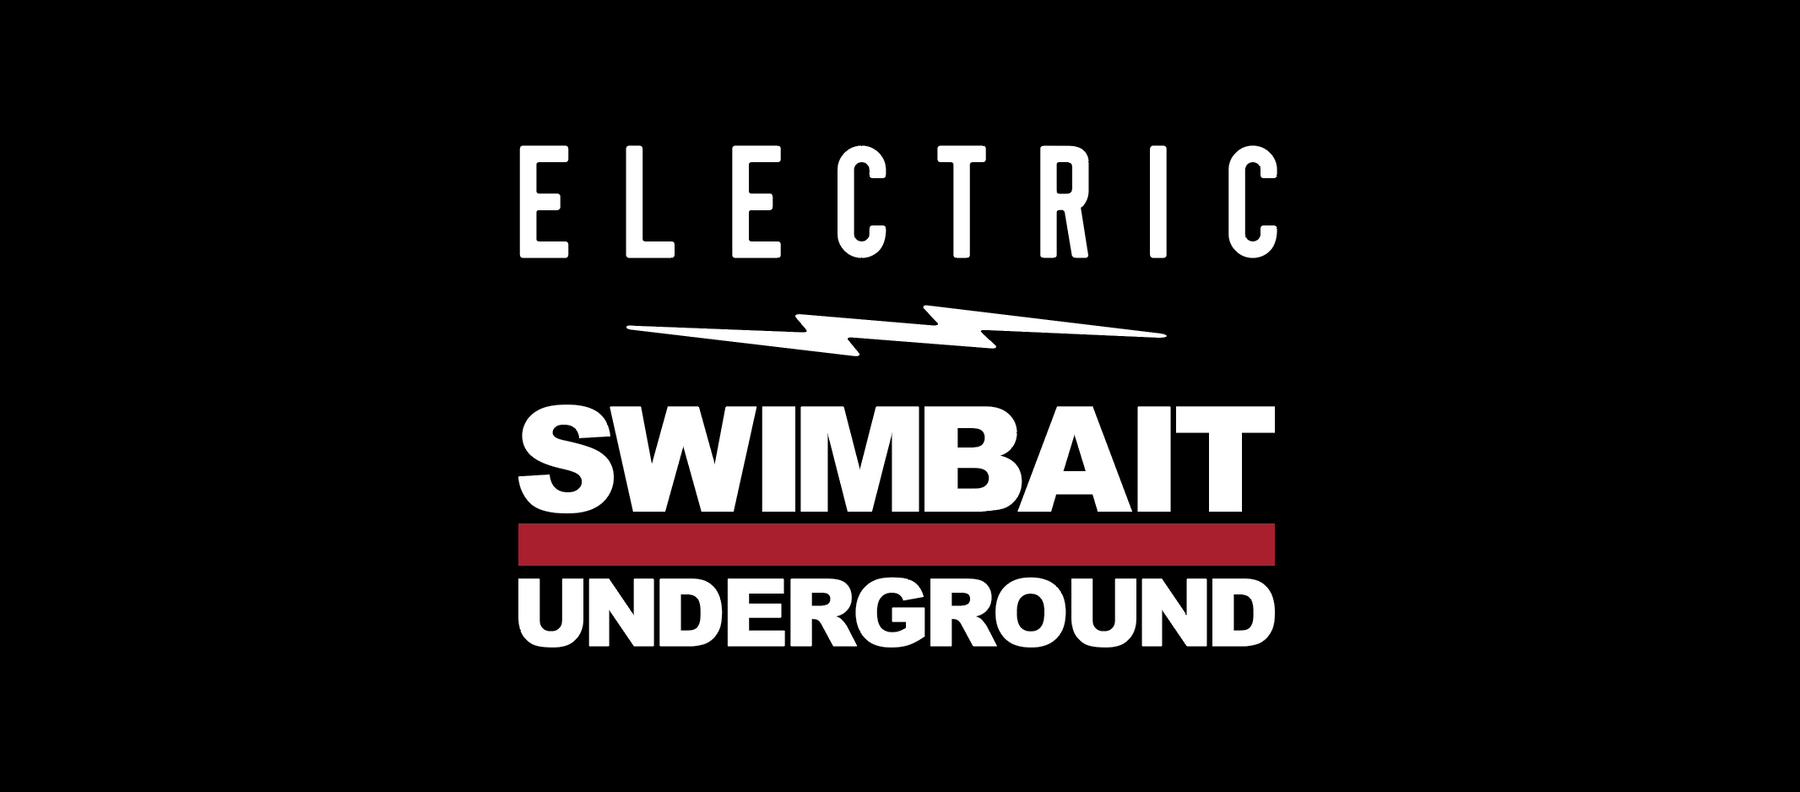 Contacts in Japan - The Underground - Swimbait Underground